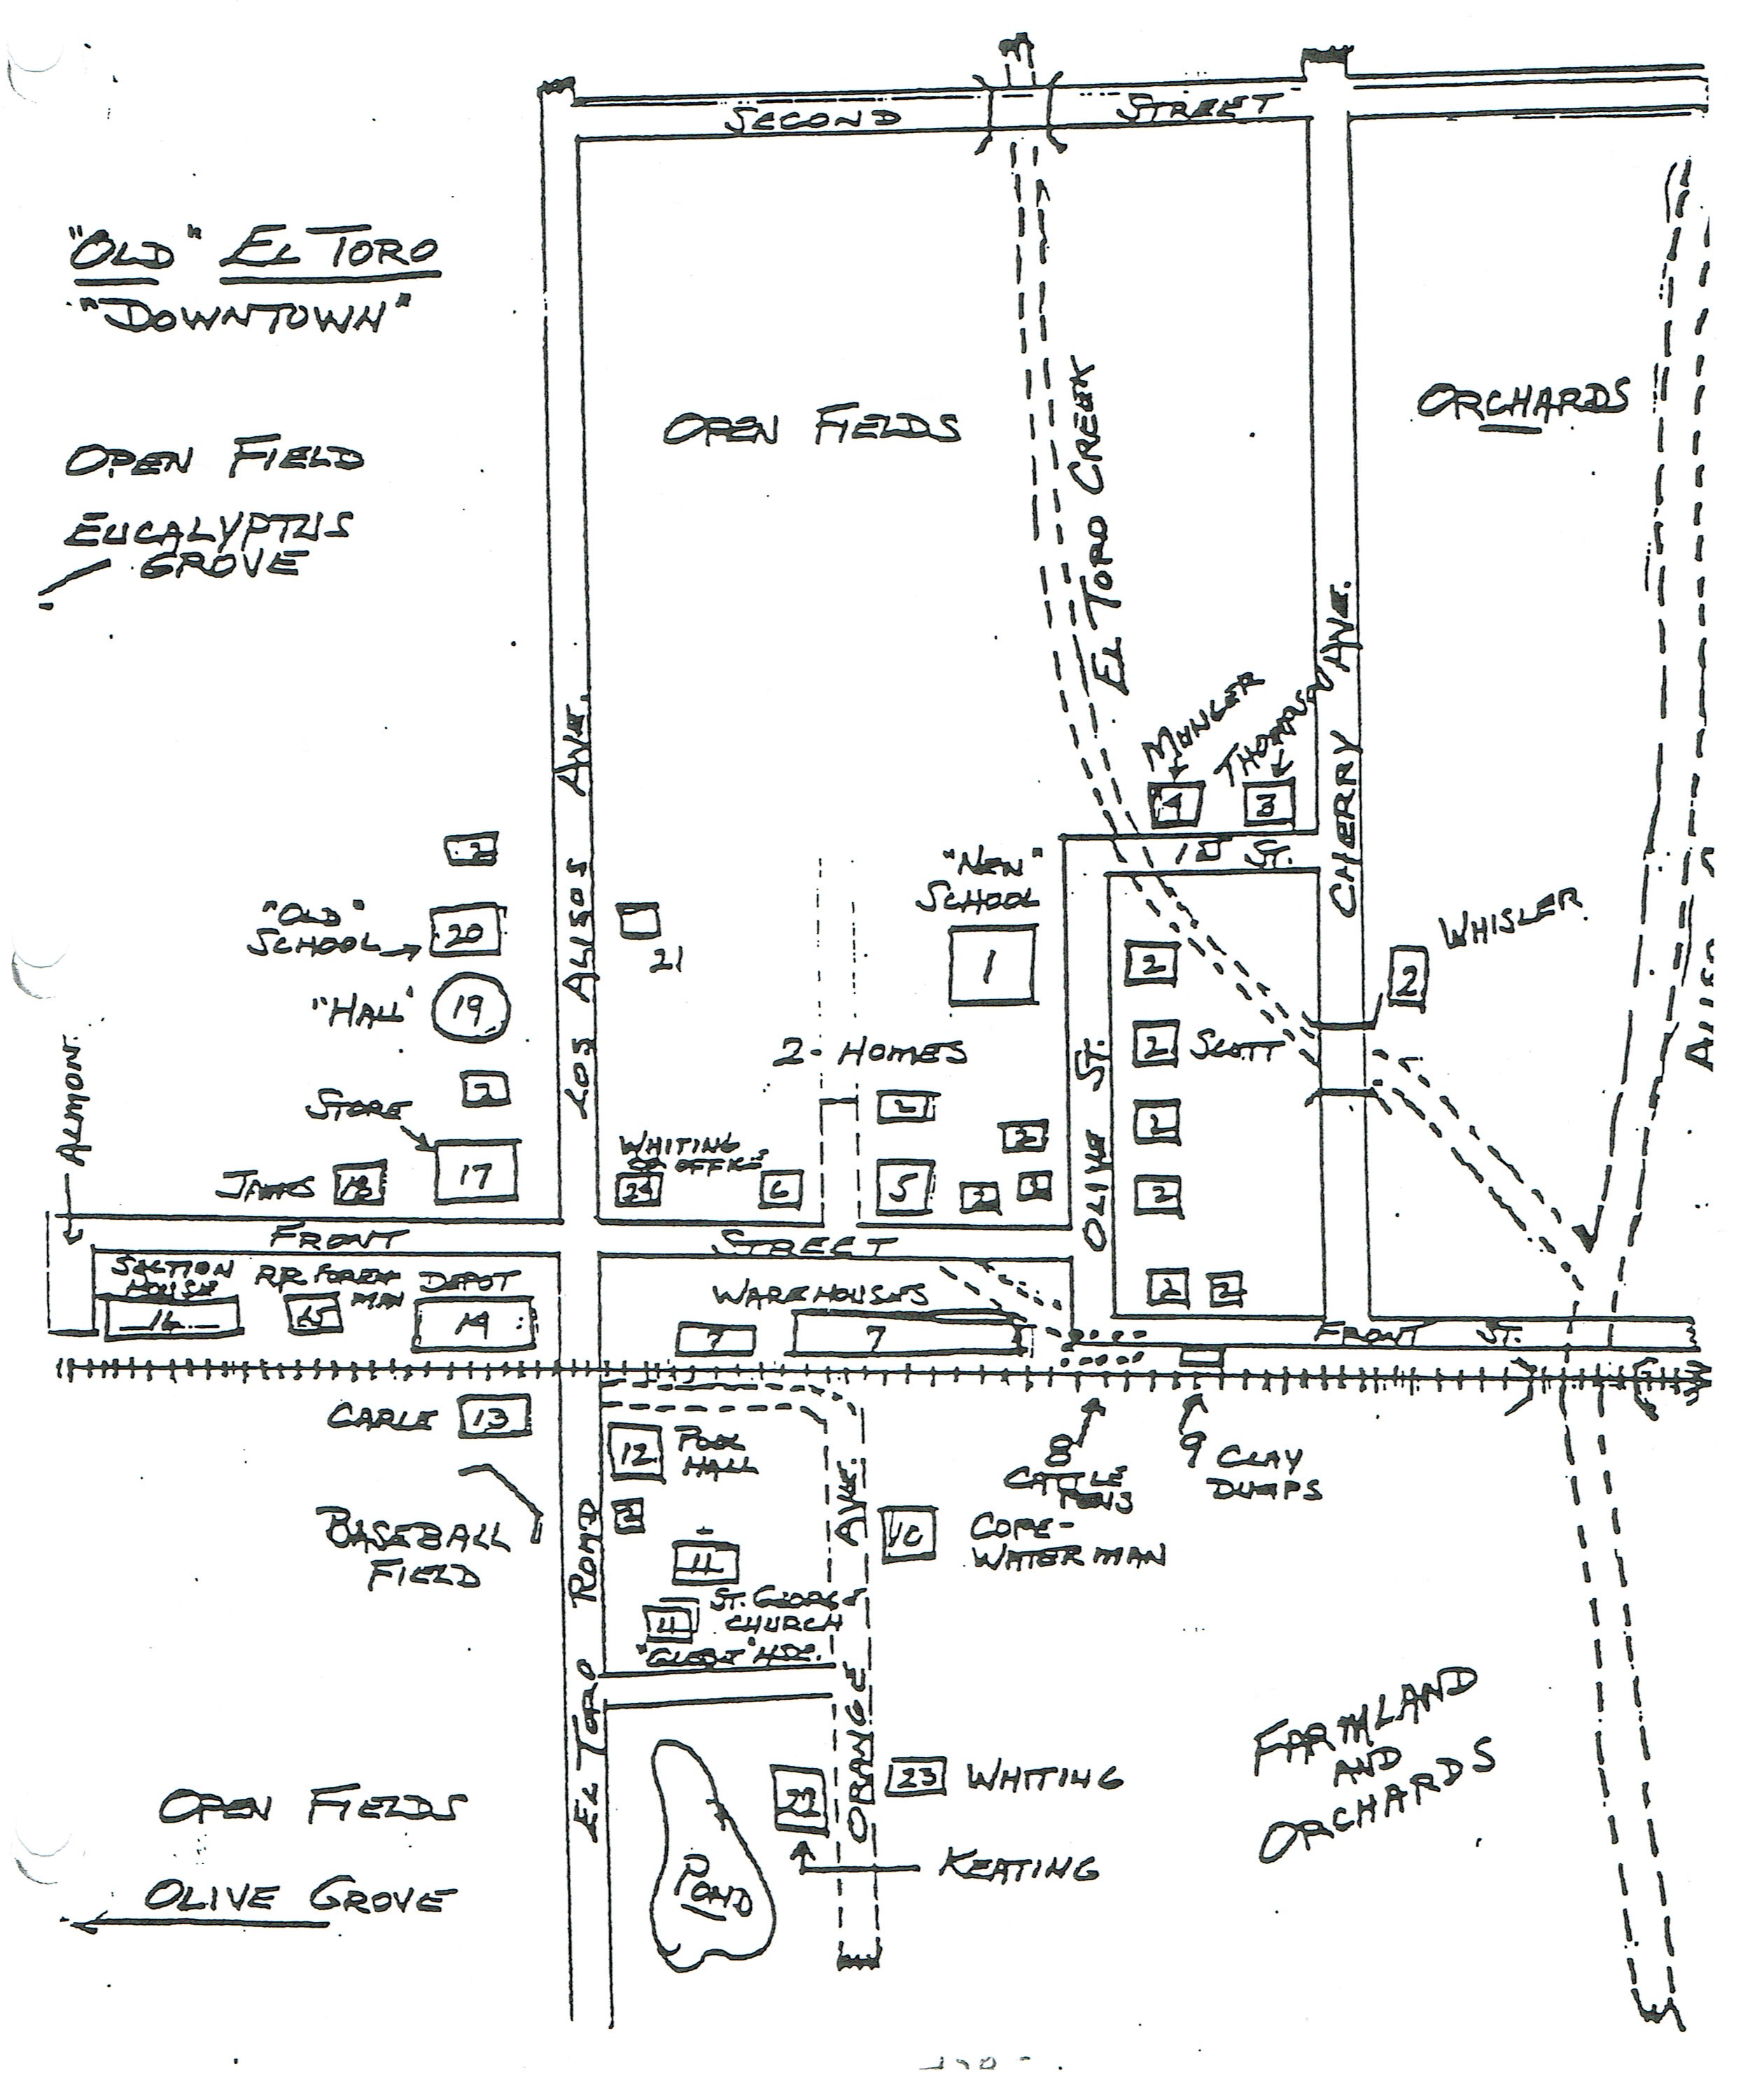 Map of Old El Toro